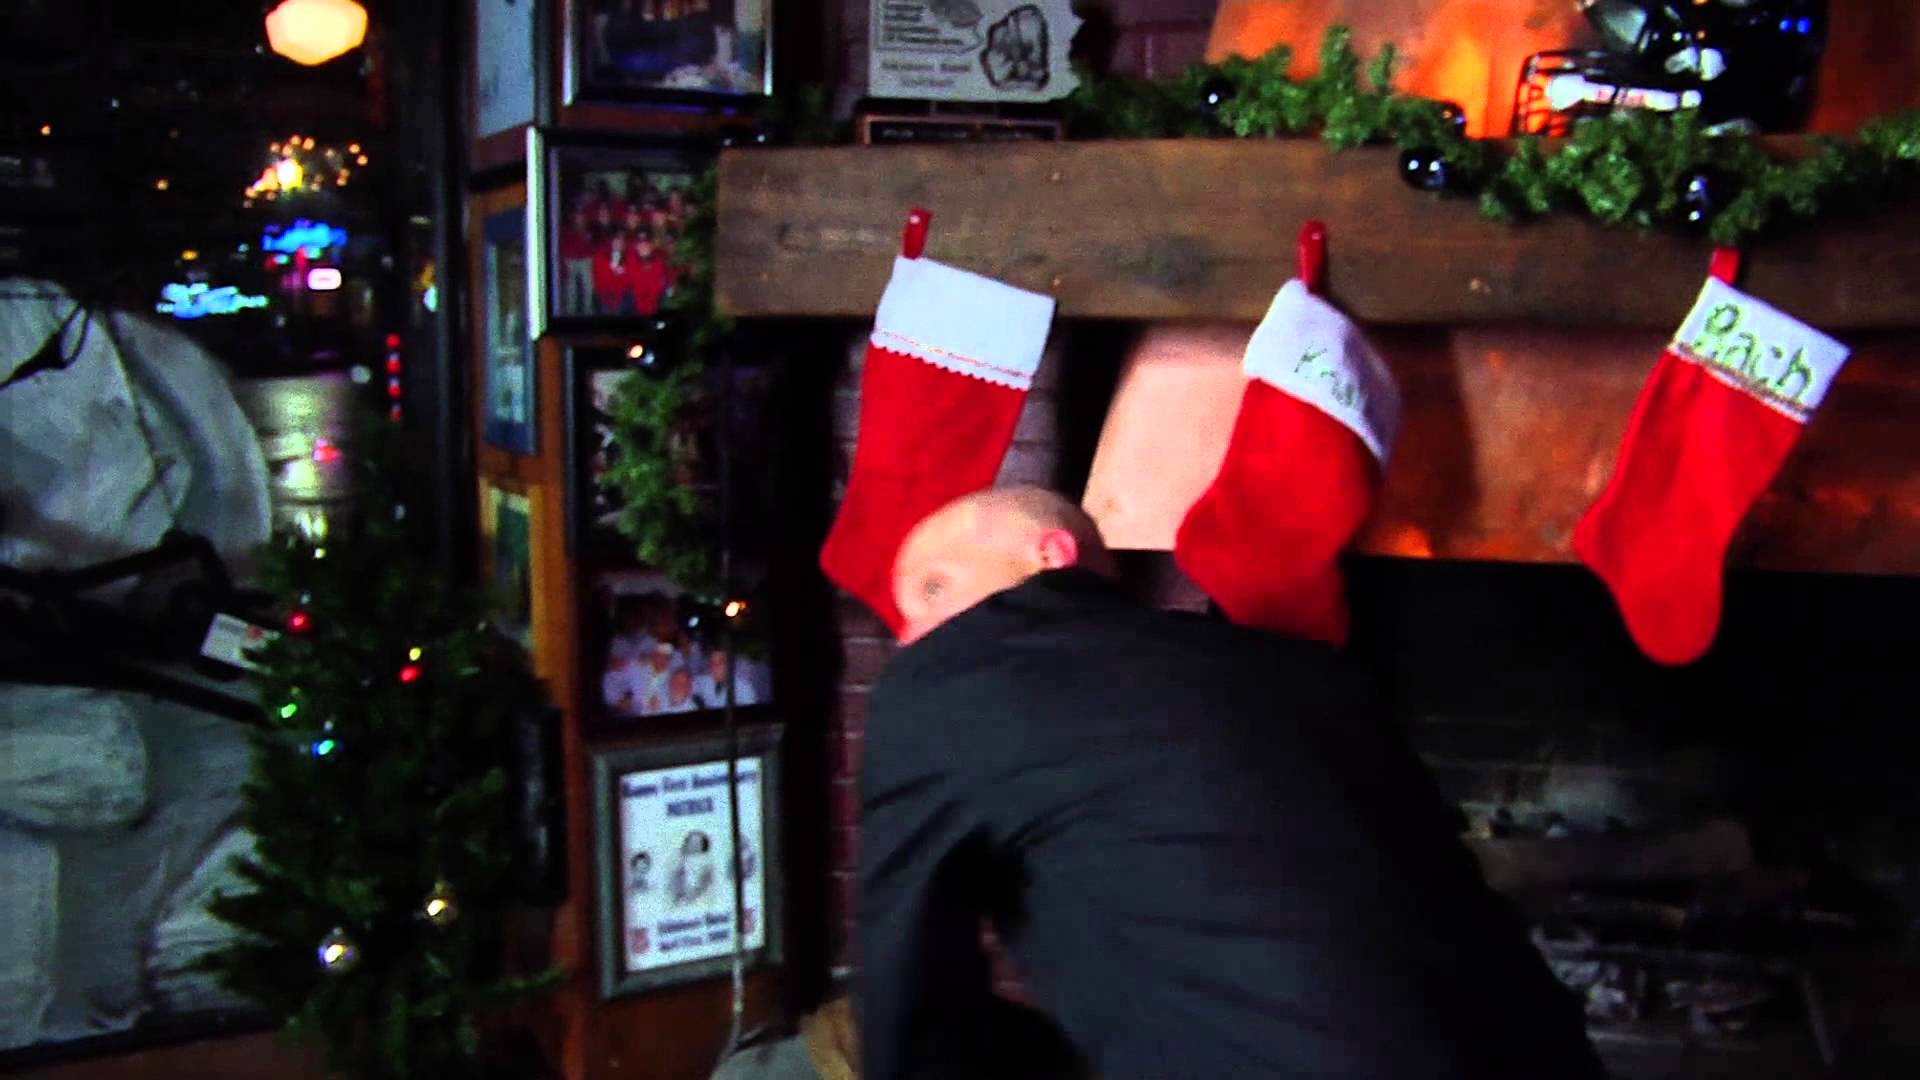 Krampus: The Christmas Devil Pics, Movie Collection